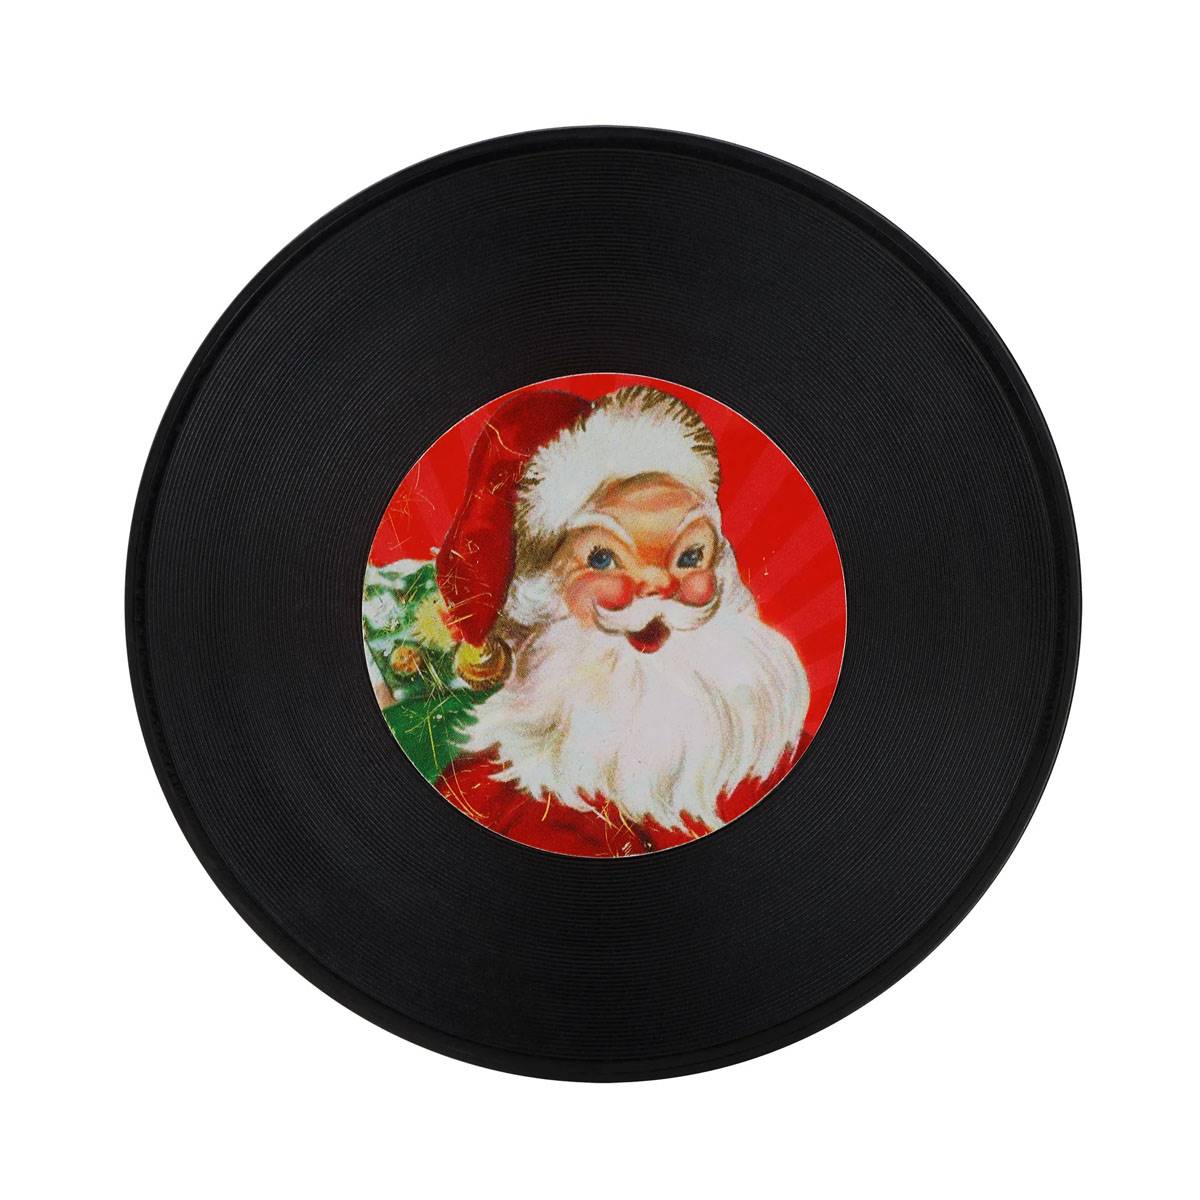 Mr. Christmas Santa Baby Mini Record Christmas Ornament